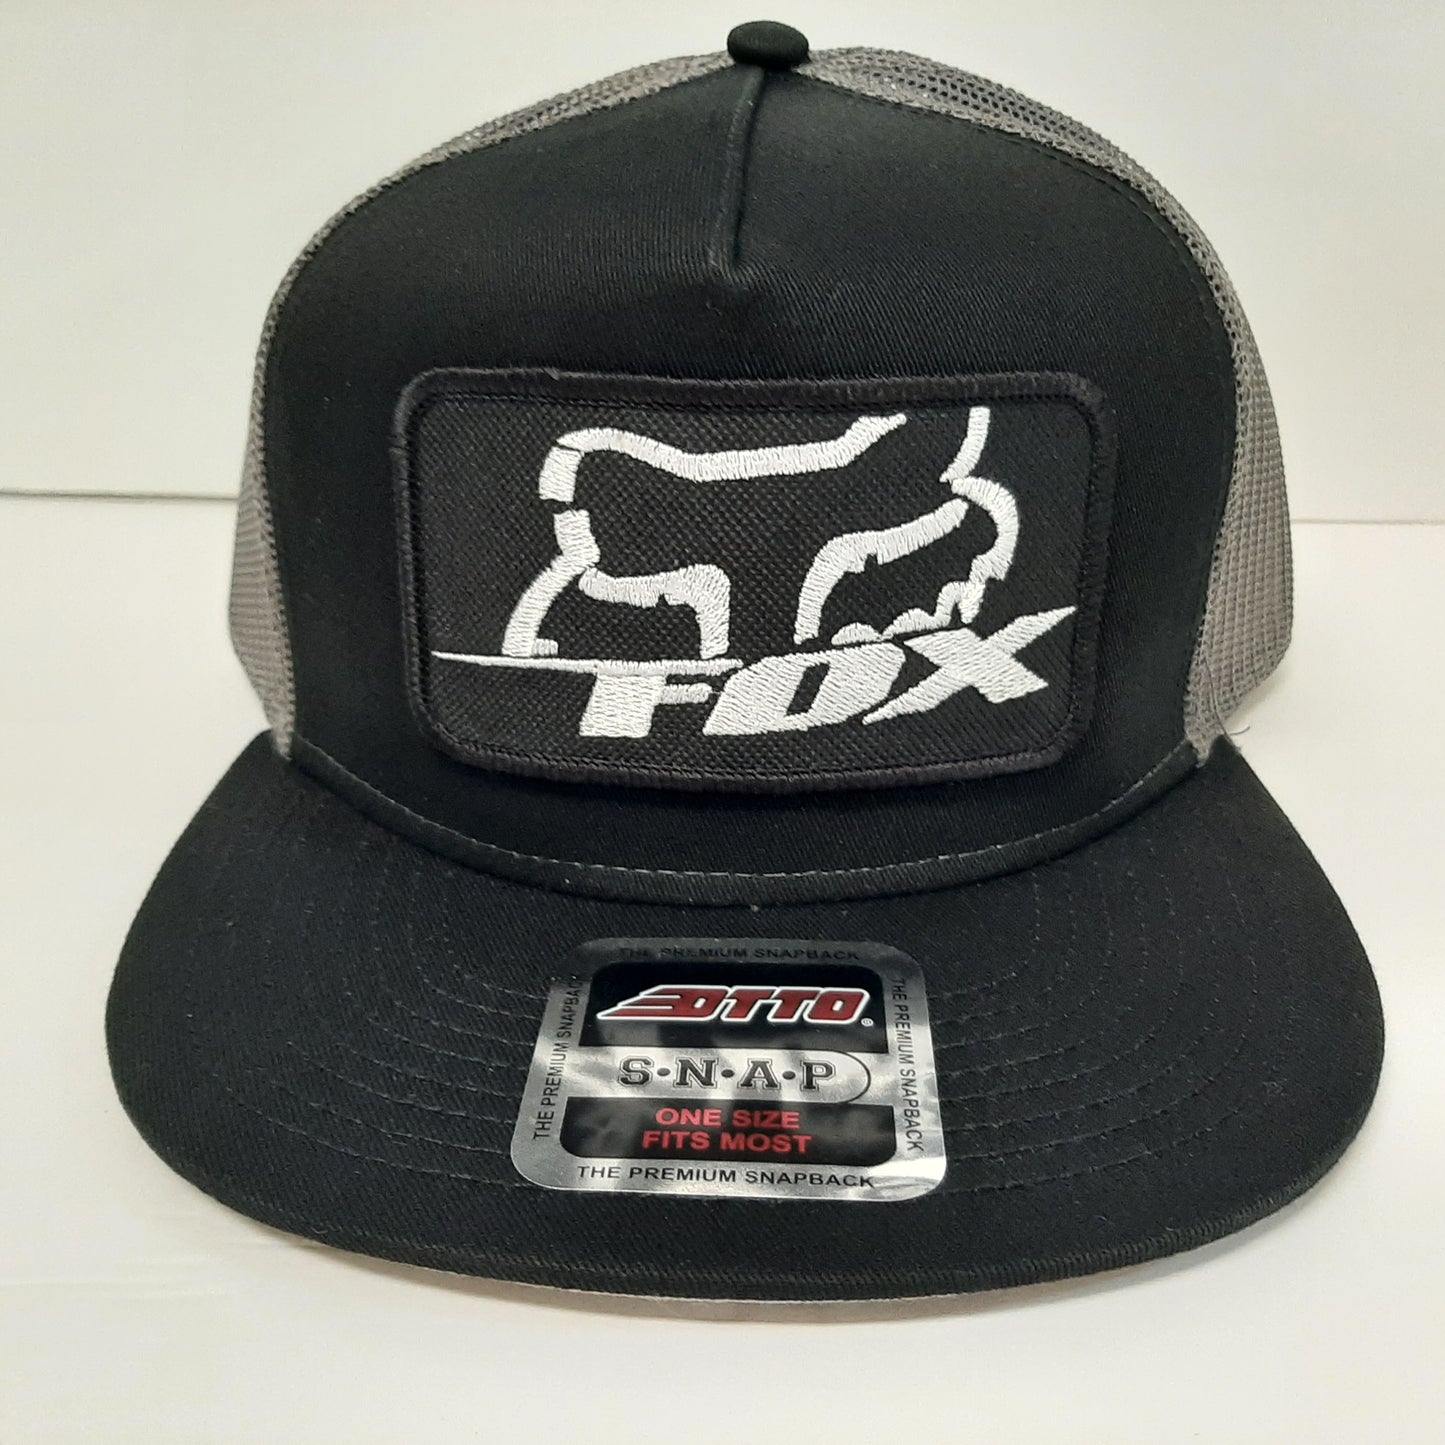 Fox Racing Otto Embroidered Patch Flat Bill Mesh Snapback Baseball Cap Hat Black